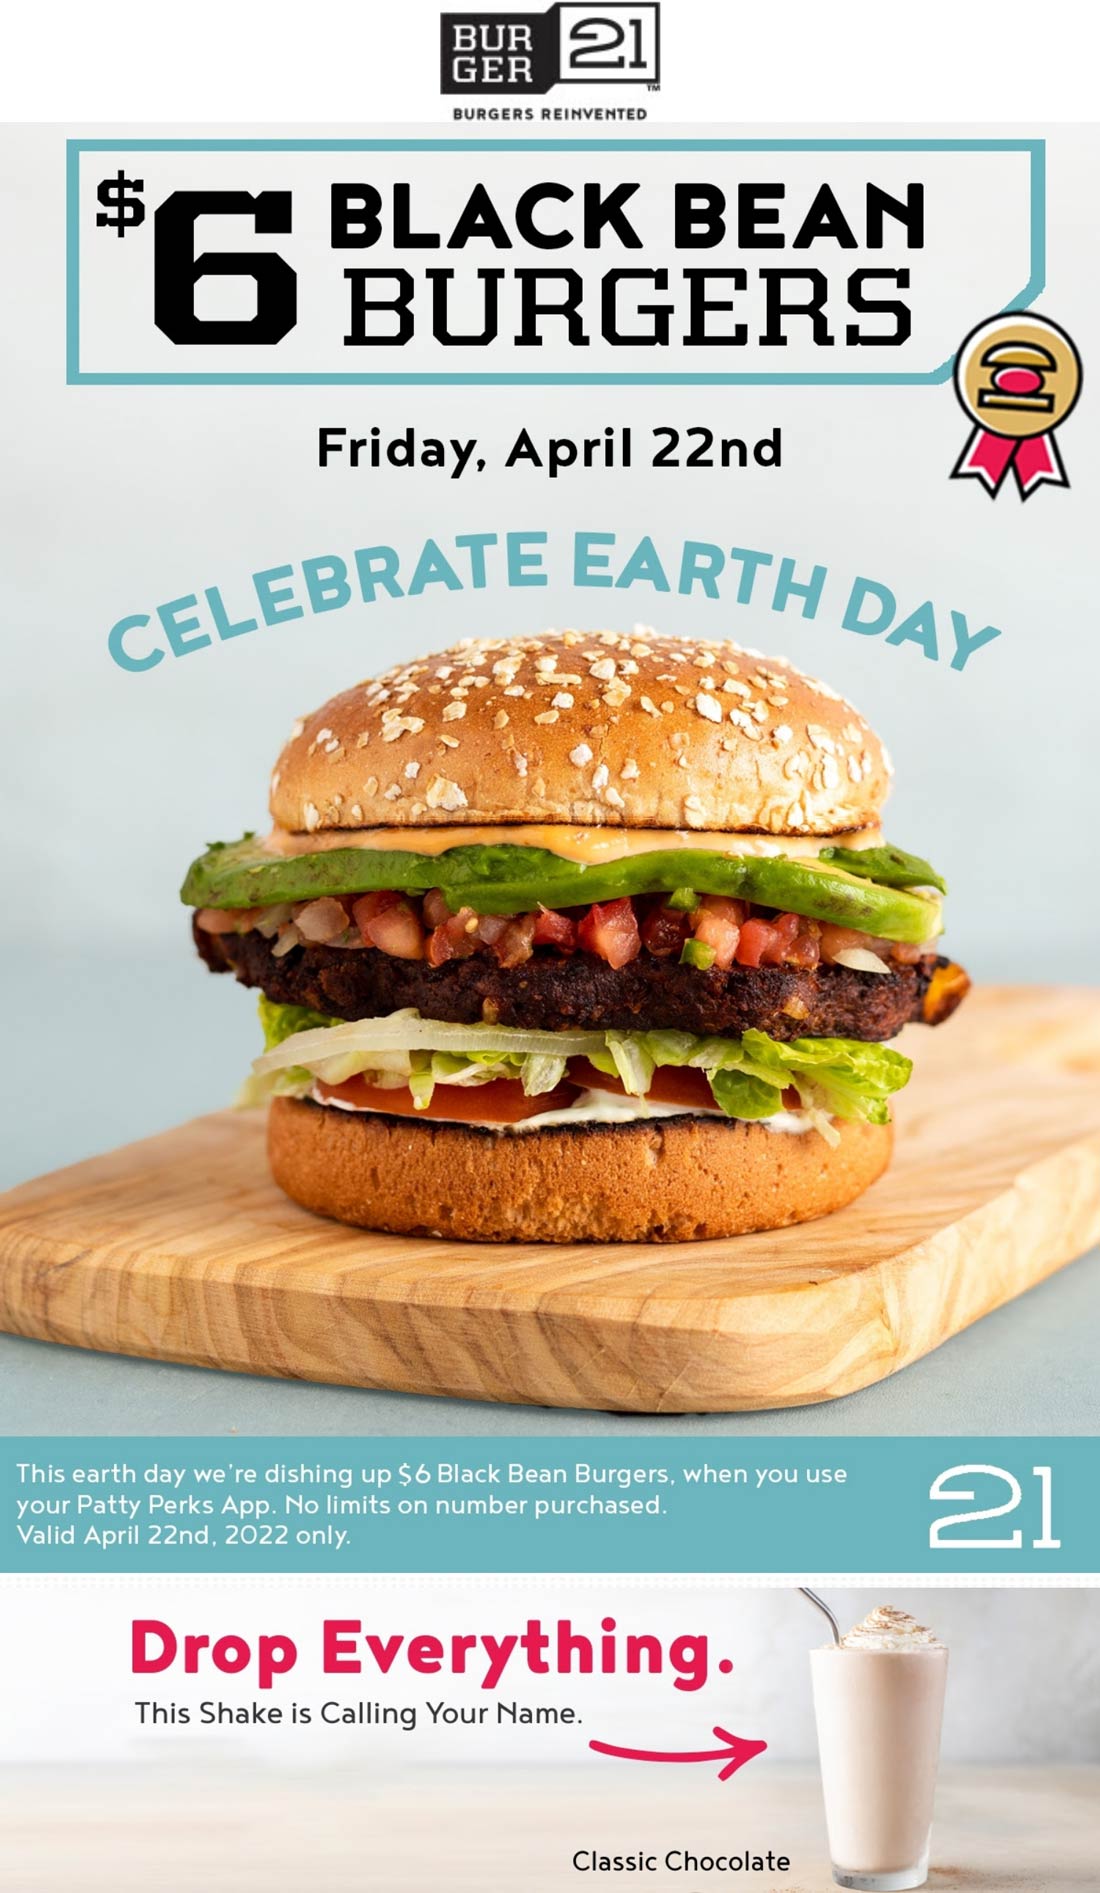 Burger 21 restaurants Coupon  $6 black bean vegan burgers Friday at Burger 21 restaurants #burger21 